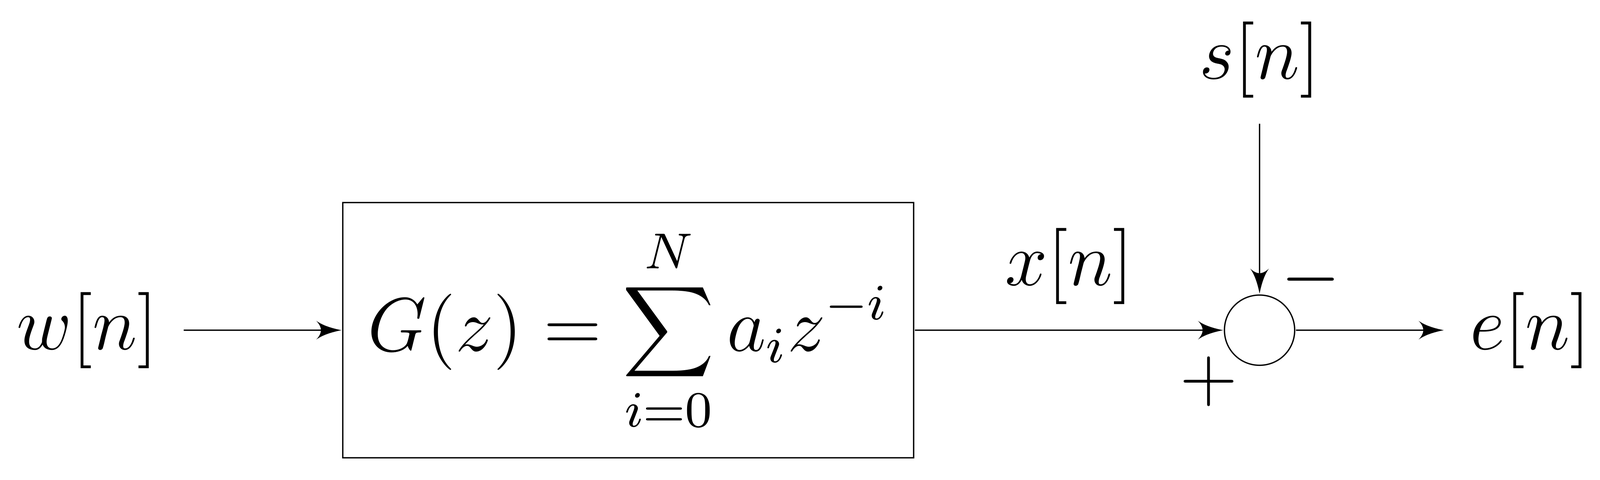 Block Diagram of Wiener Filter